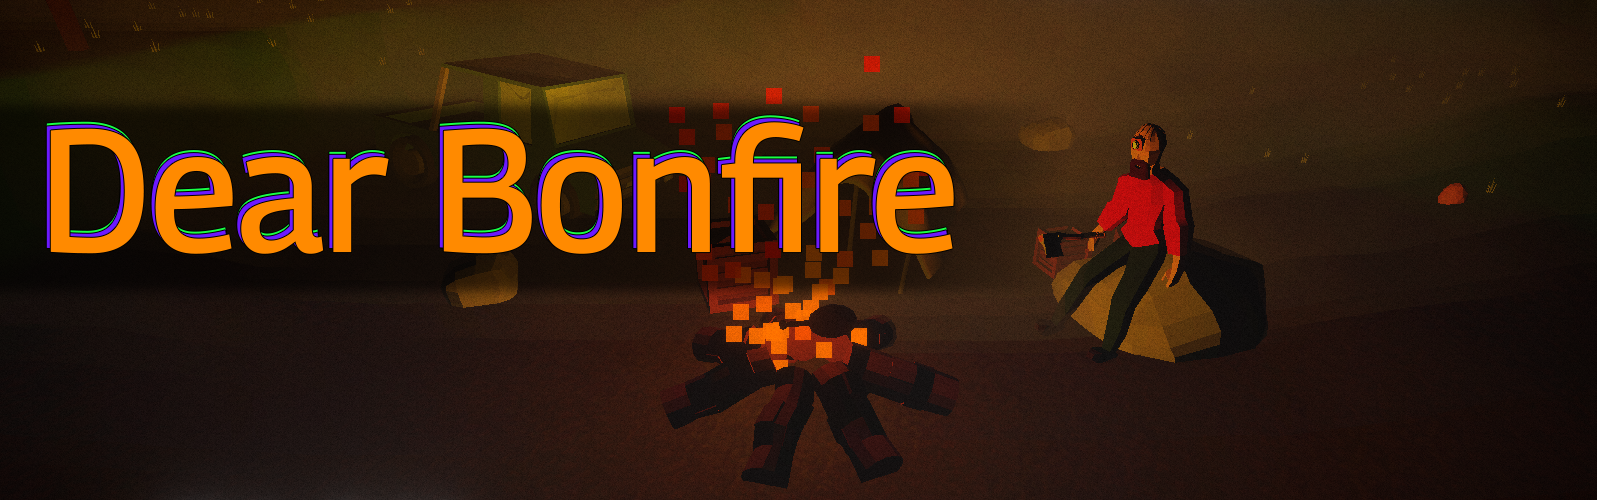 Dear Bonfire